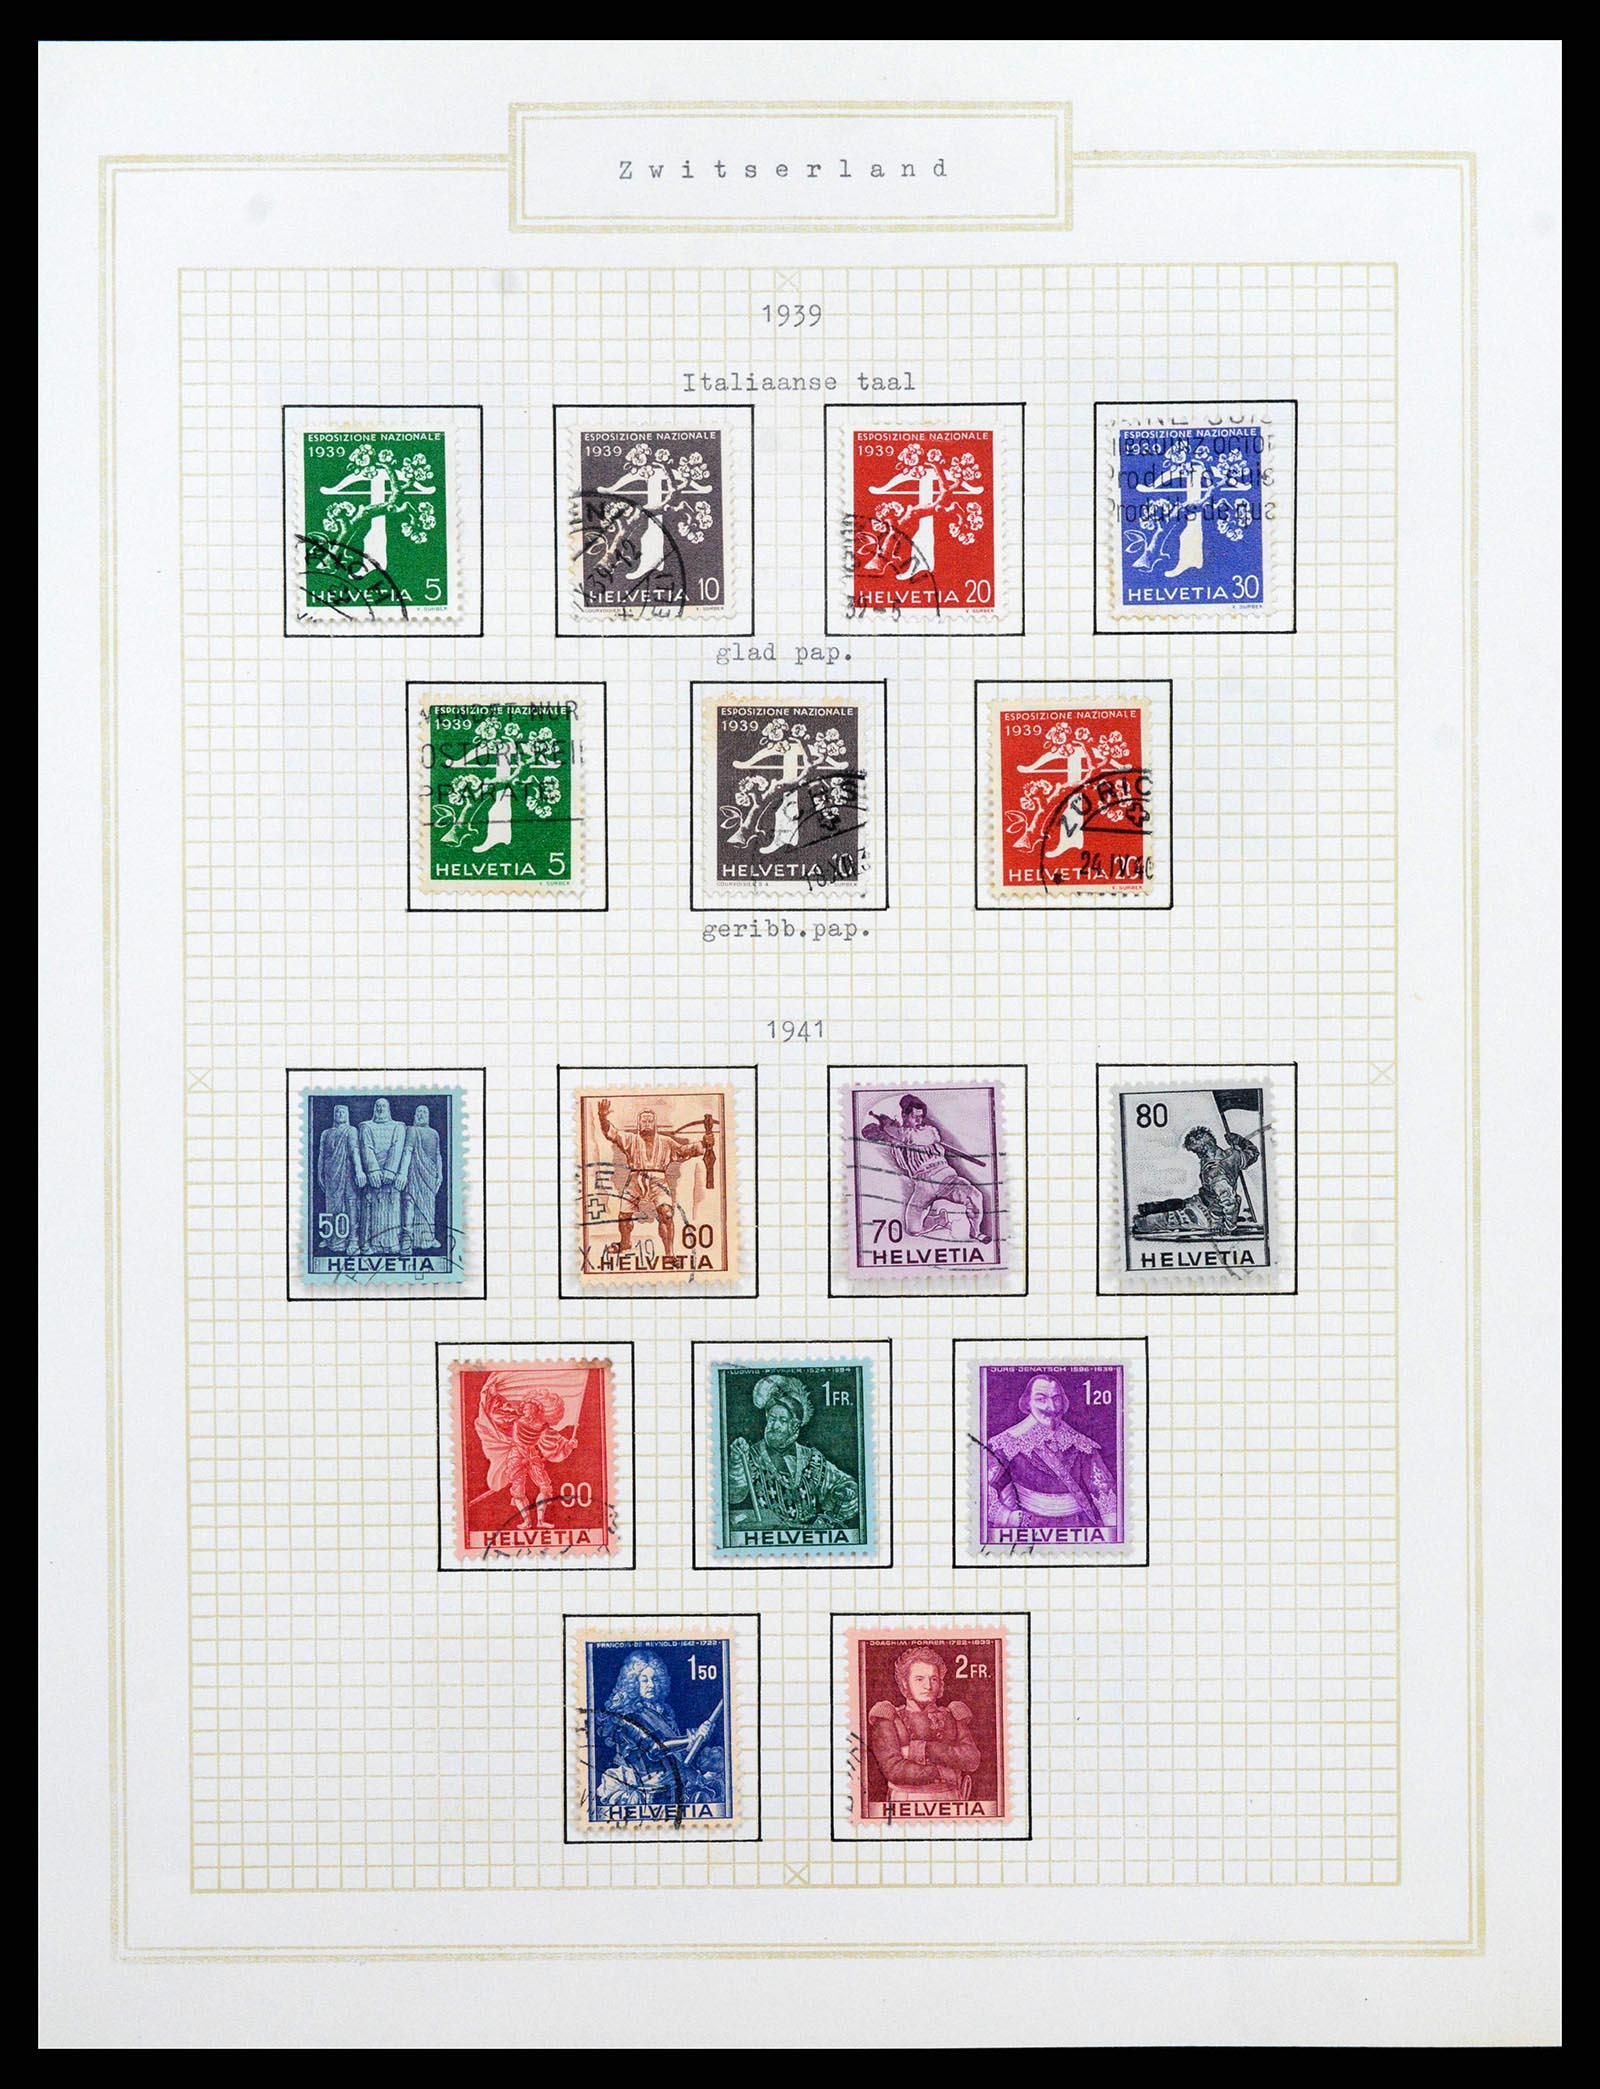 38673 0025 - Stamp collection 38673 Switzerland 1854-1991.